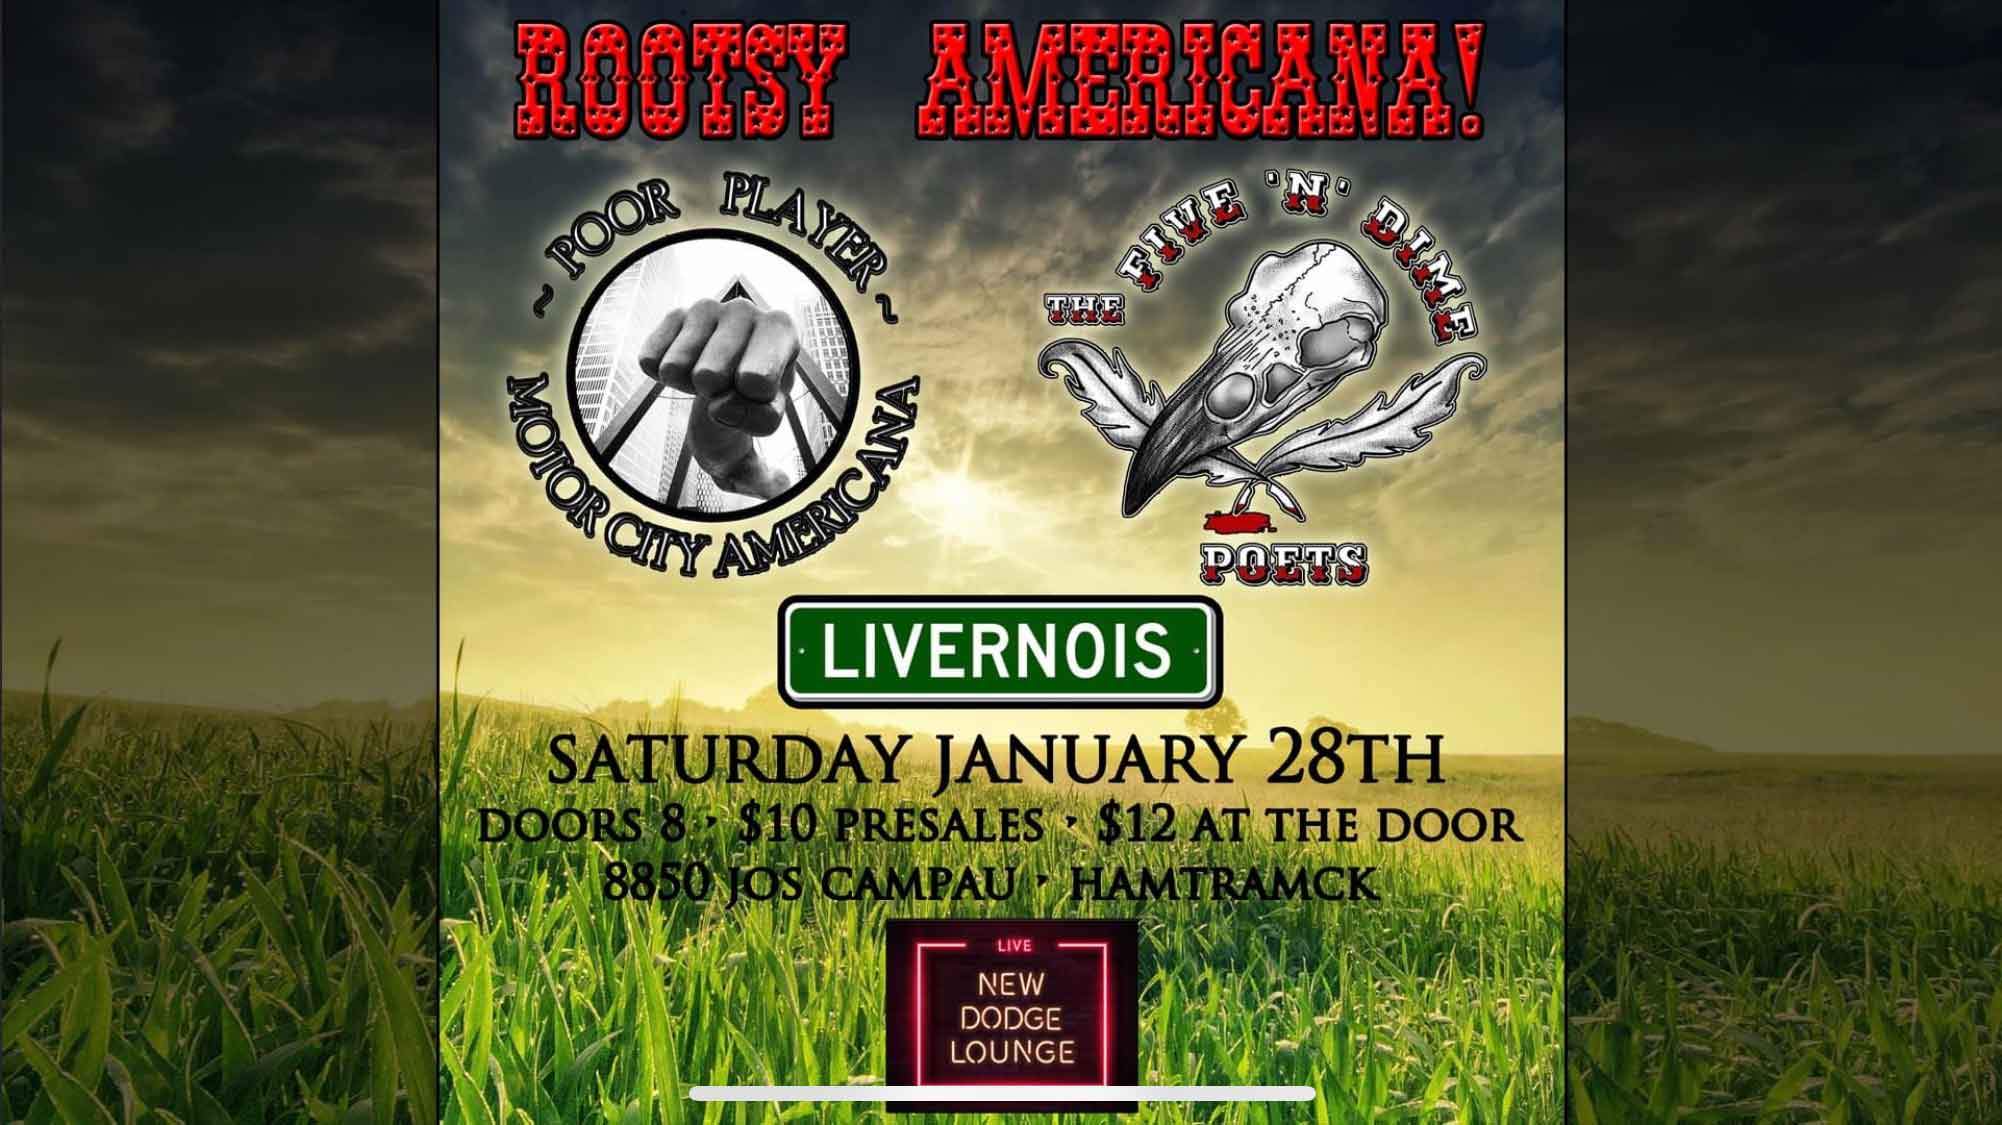 Livernois band Rootsy Americana